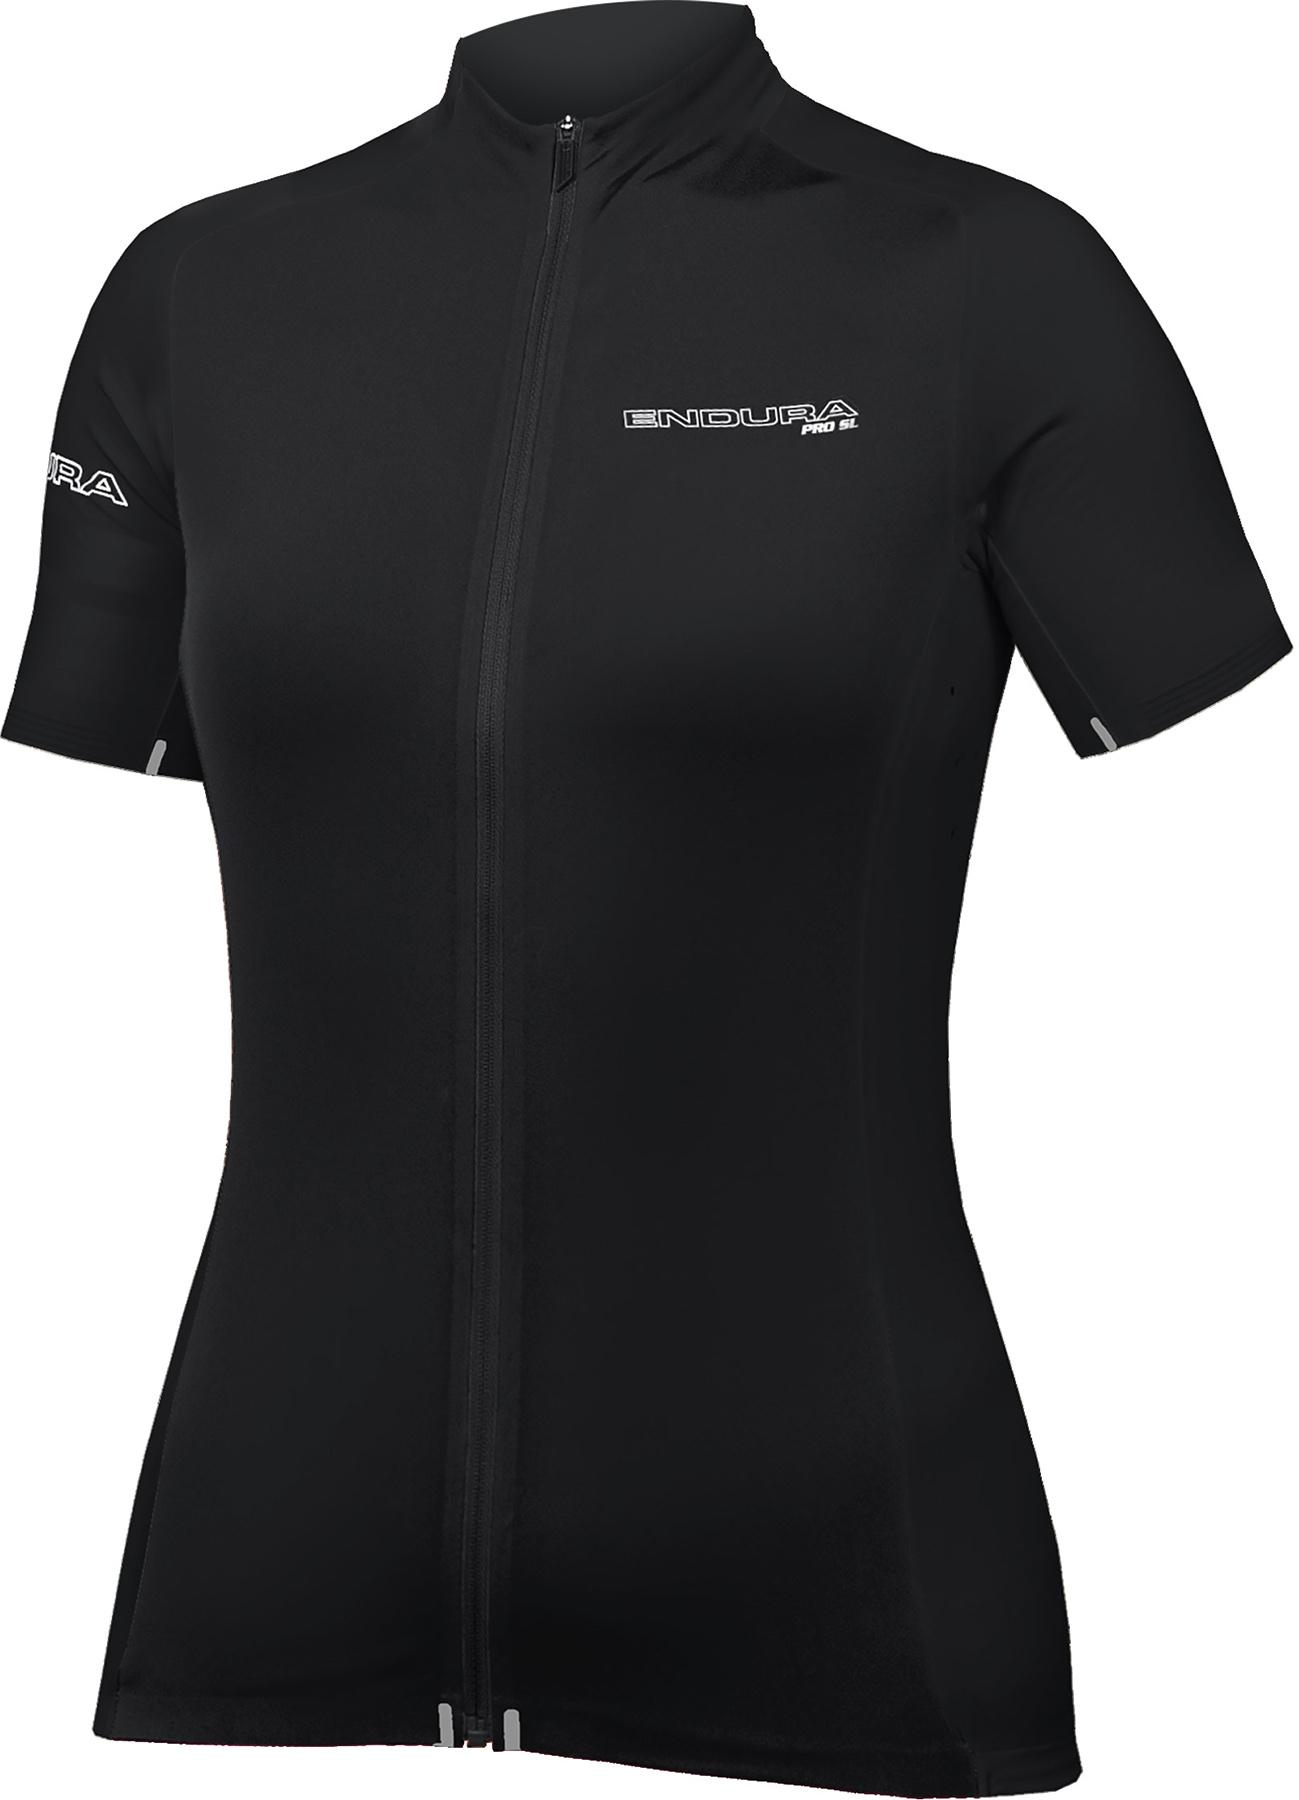 Endura Womens Pro Sl Short Sleeve Jersey - Black